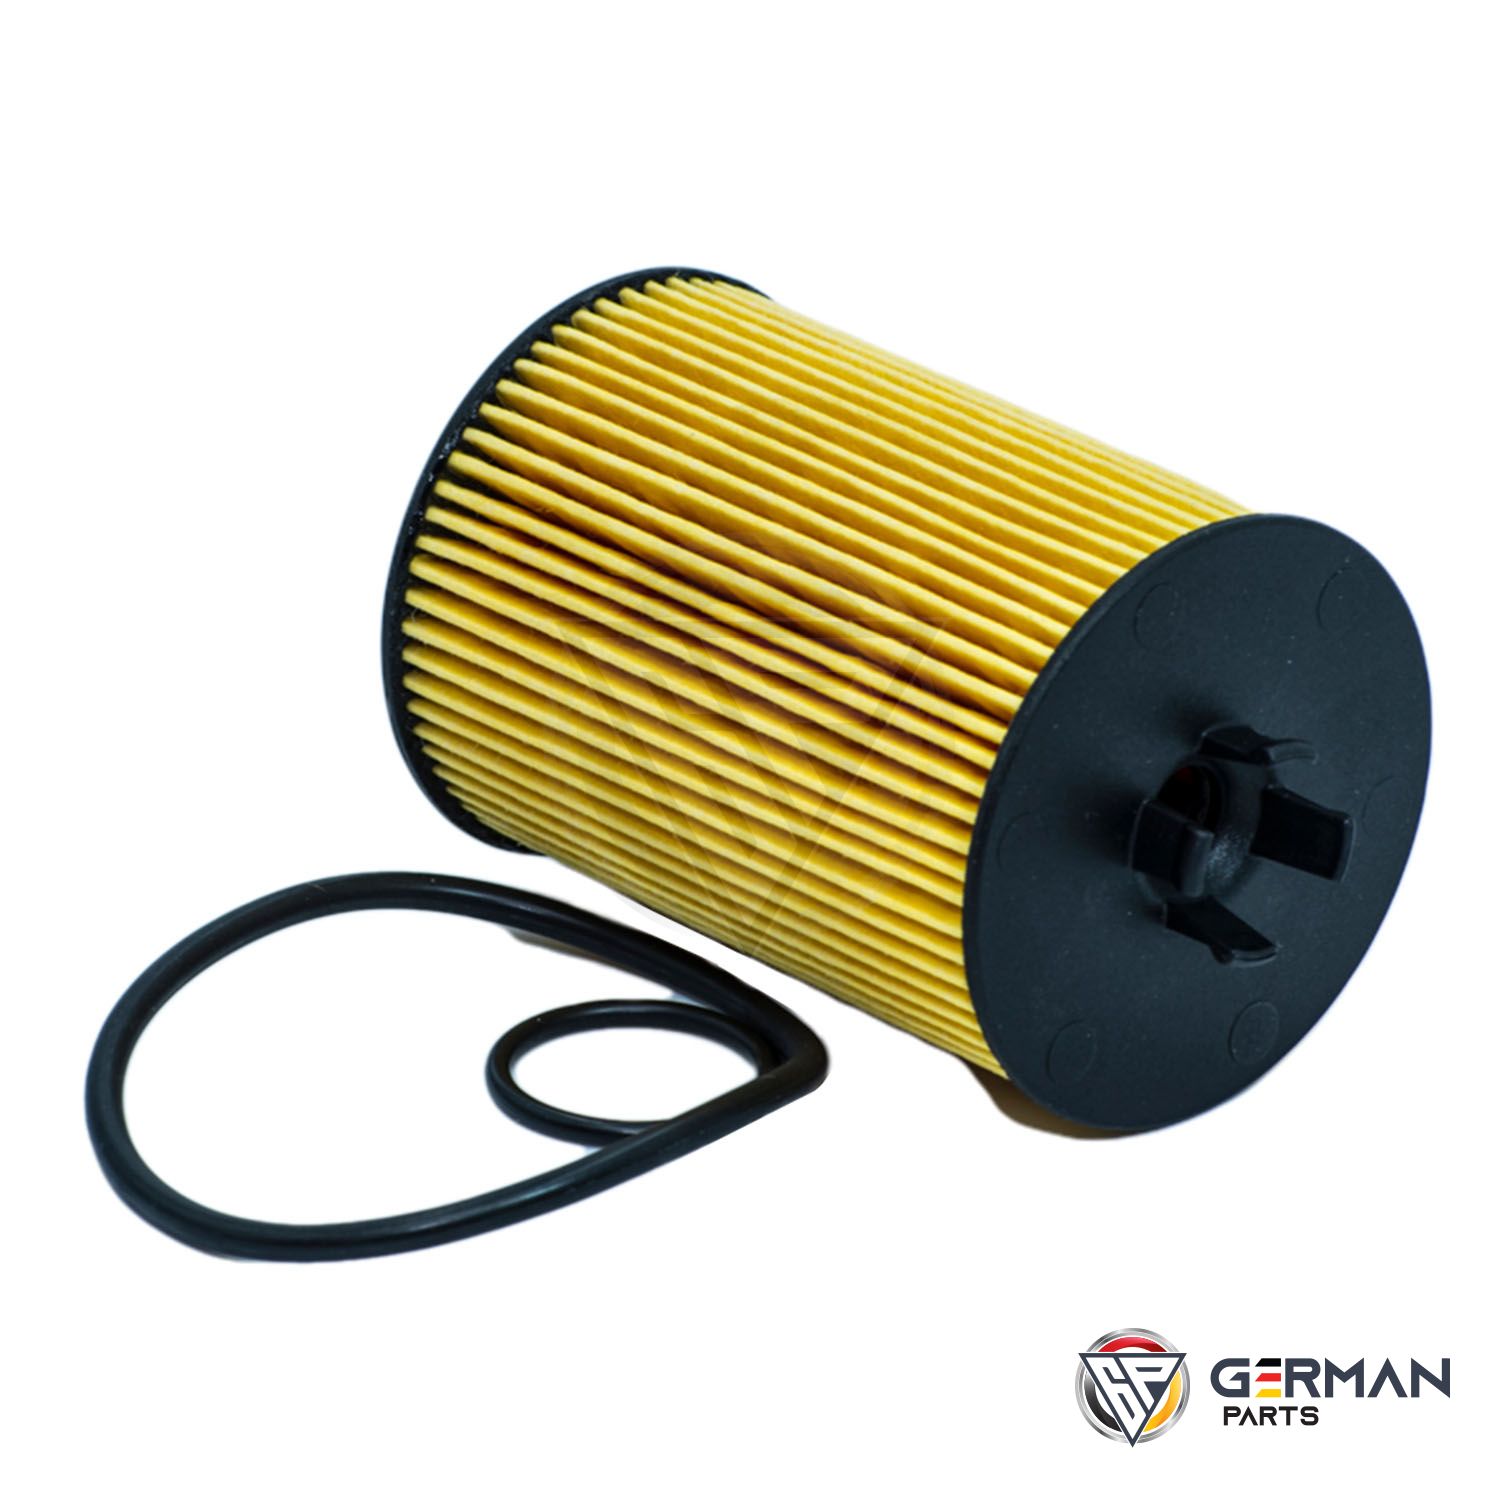 Buy Mercedes Benz Oil Filter 2661800009 - German Parts